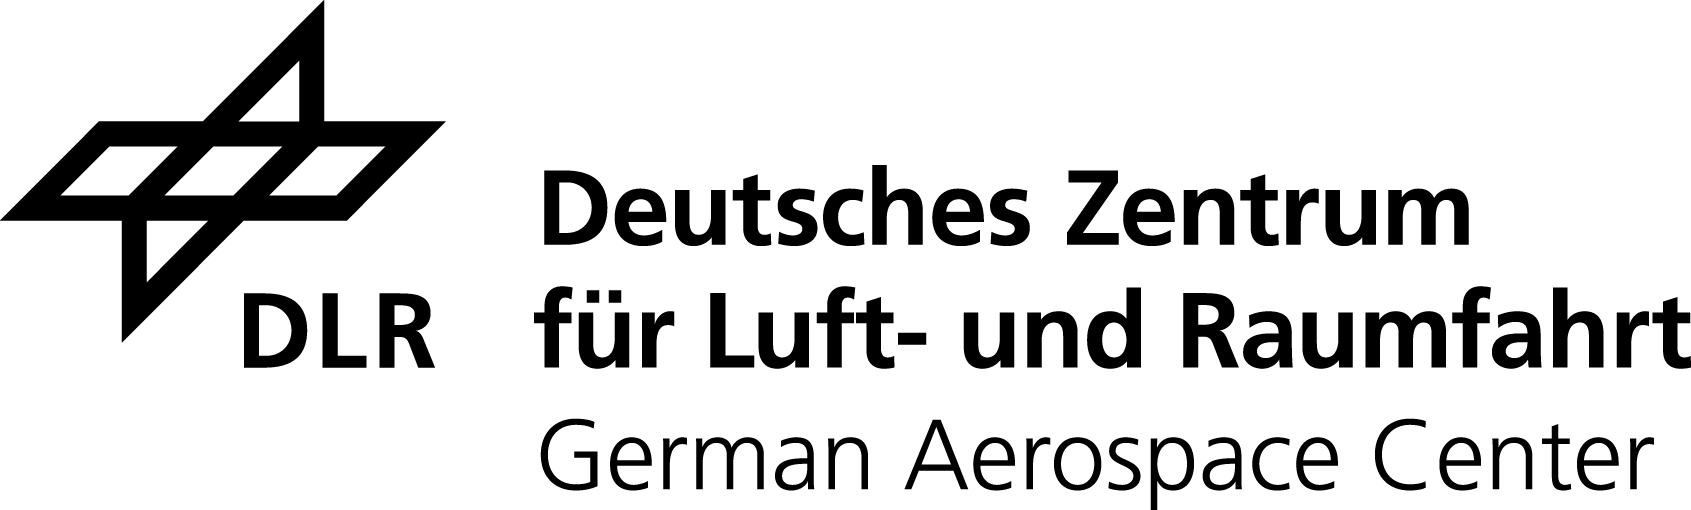 German Aerospace Center